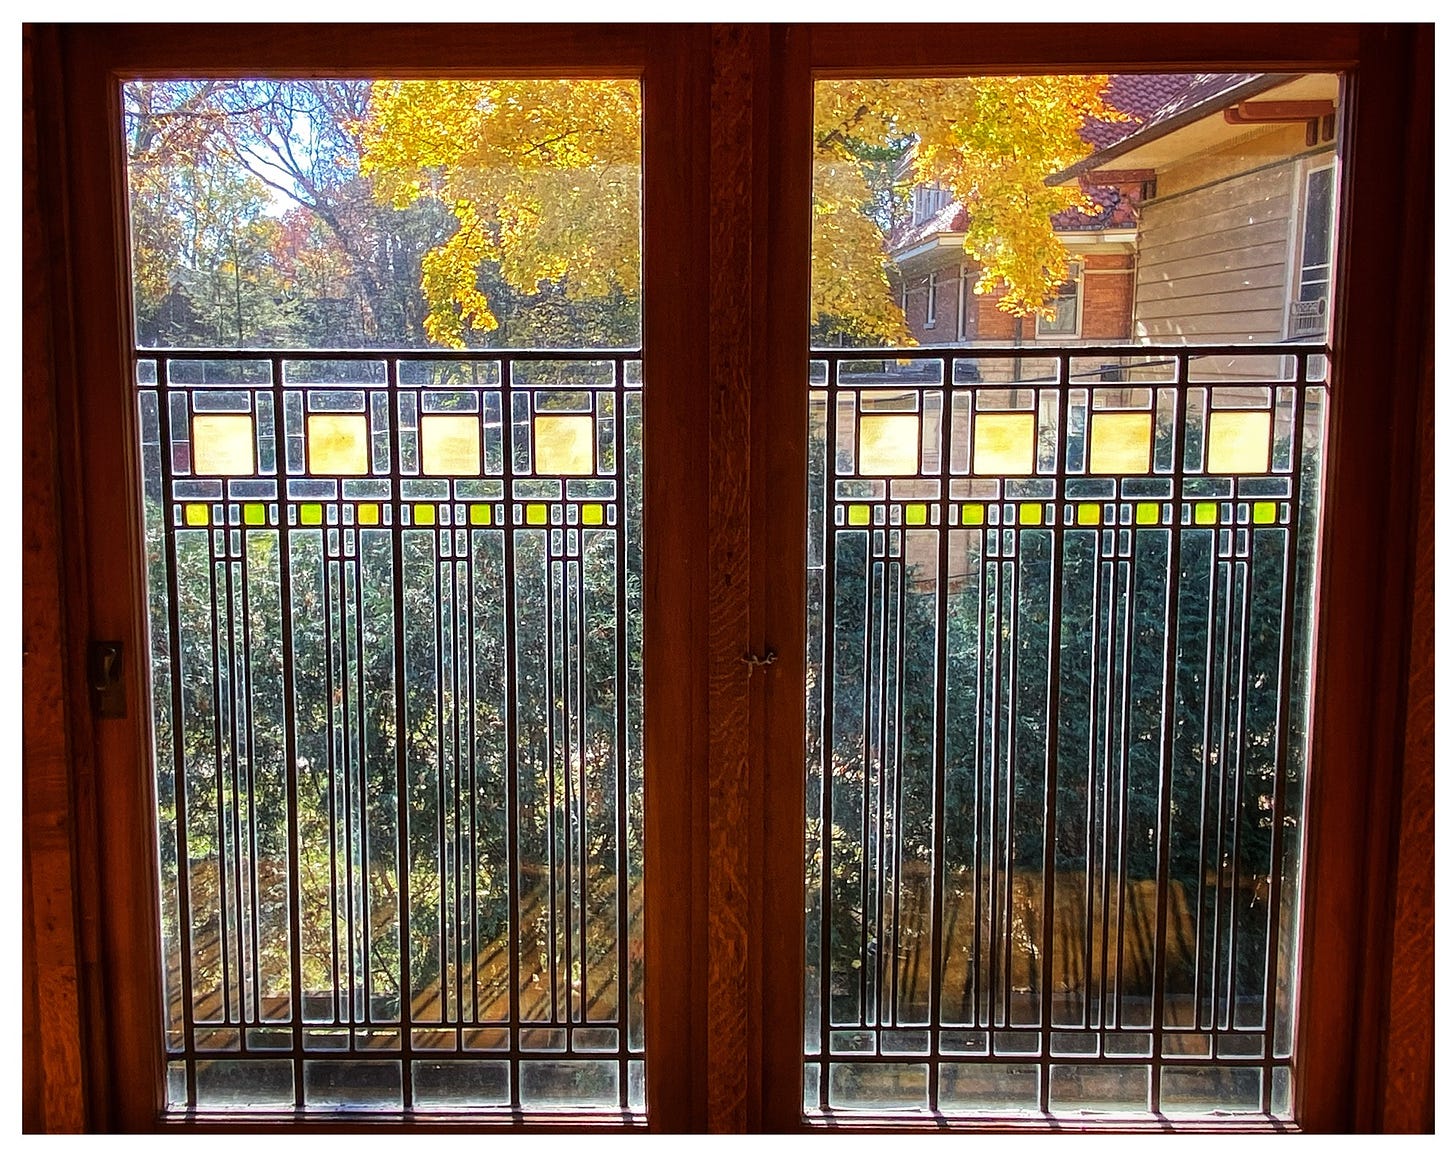 Frank Lloyd Wright window, fall colours and beauty